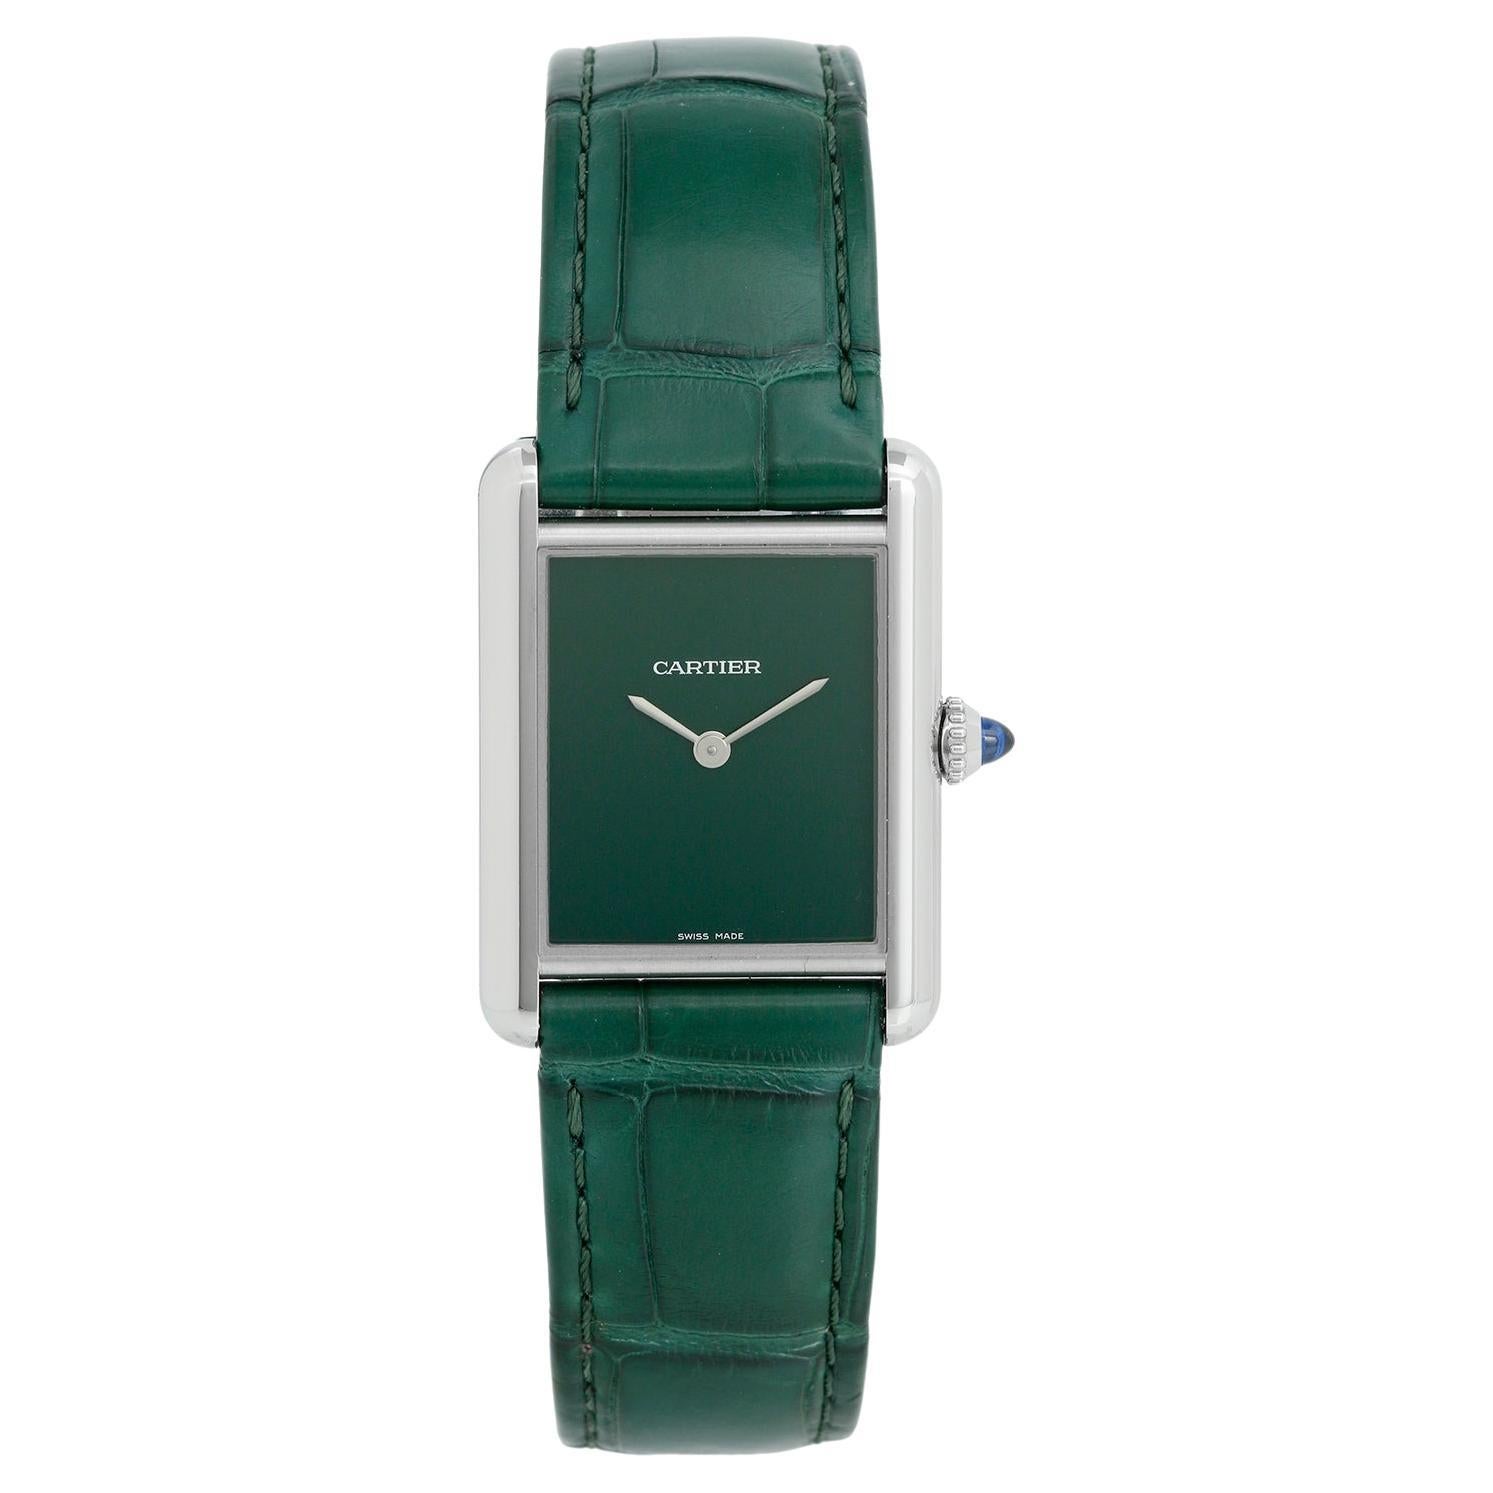 Cartier Grande montre Tank Must Watch verte réf. WSTA0056